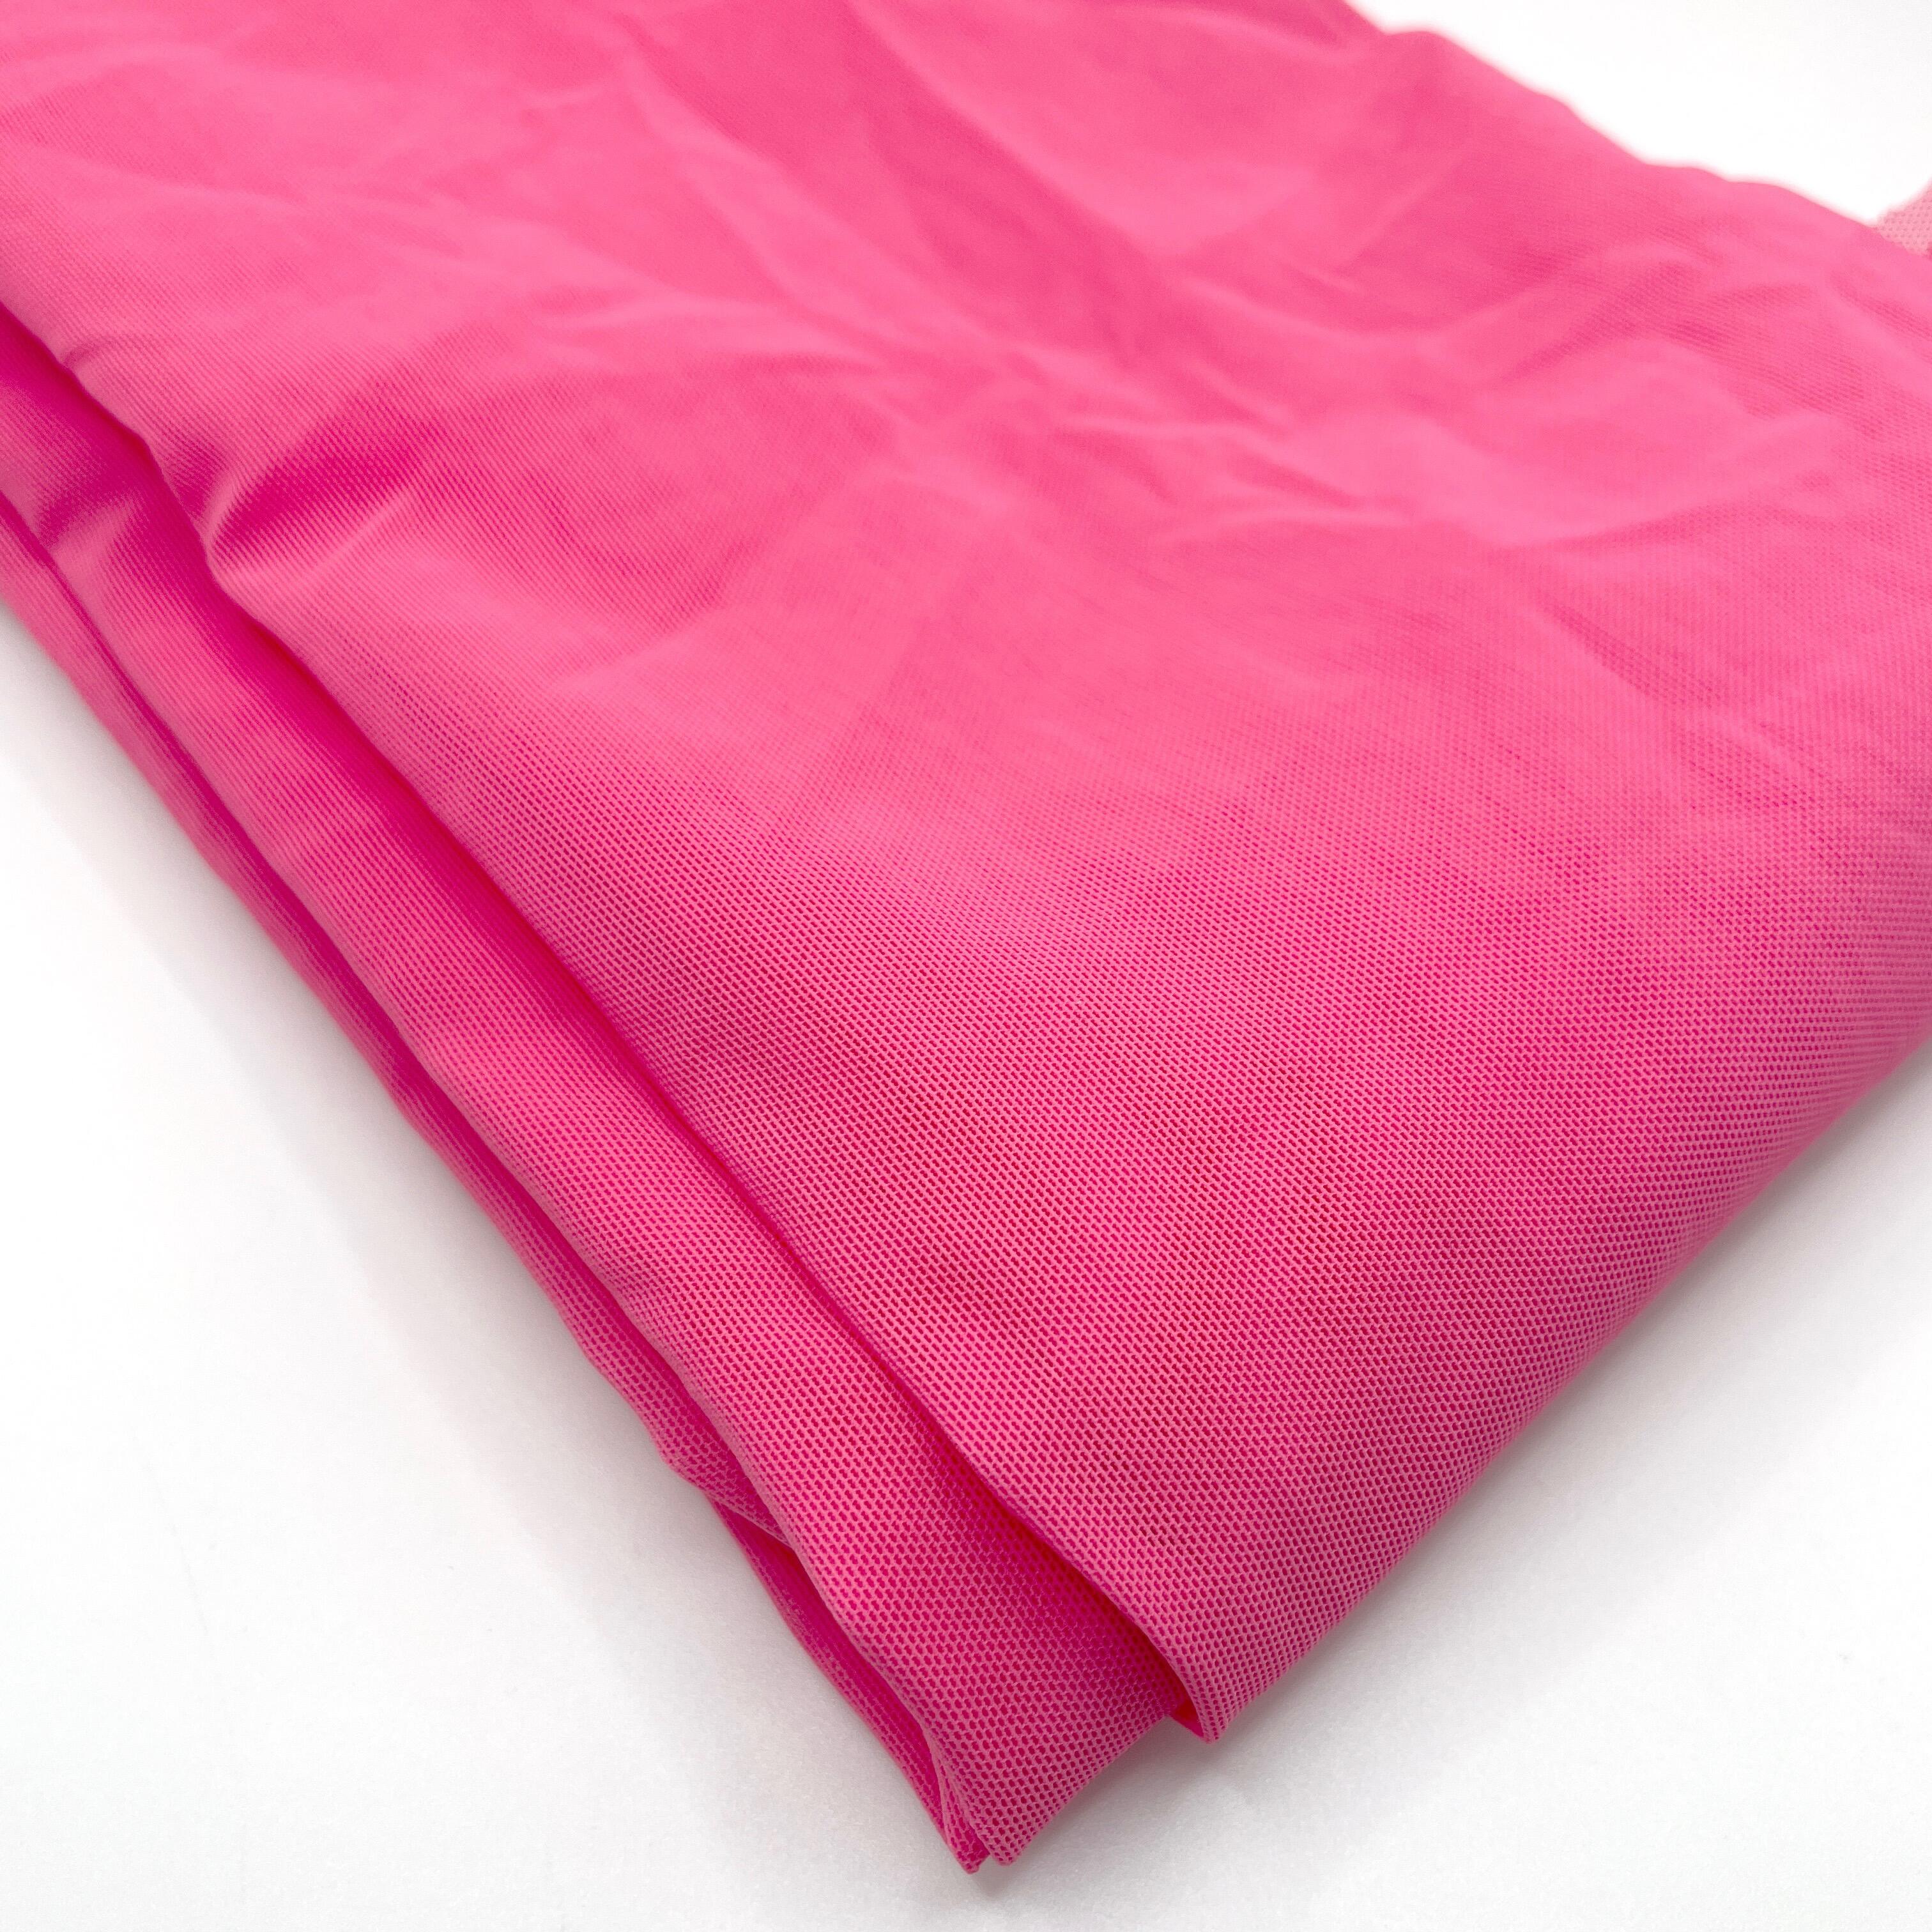 Fabric REMNANT - Bra/Lingerie Making - Light Powernet, Mesh - PINK